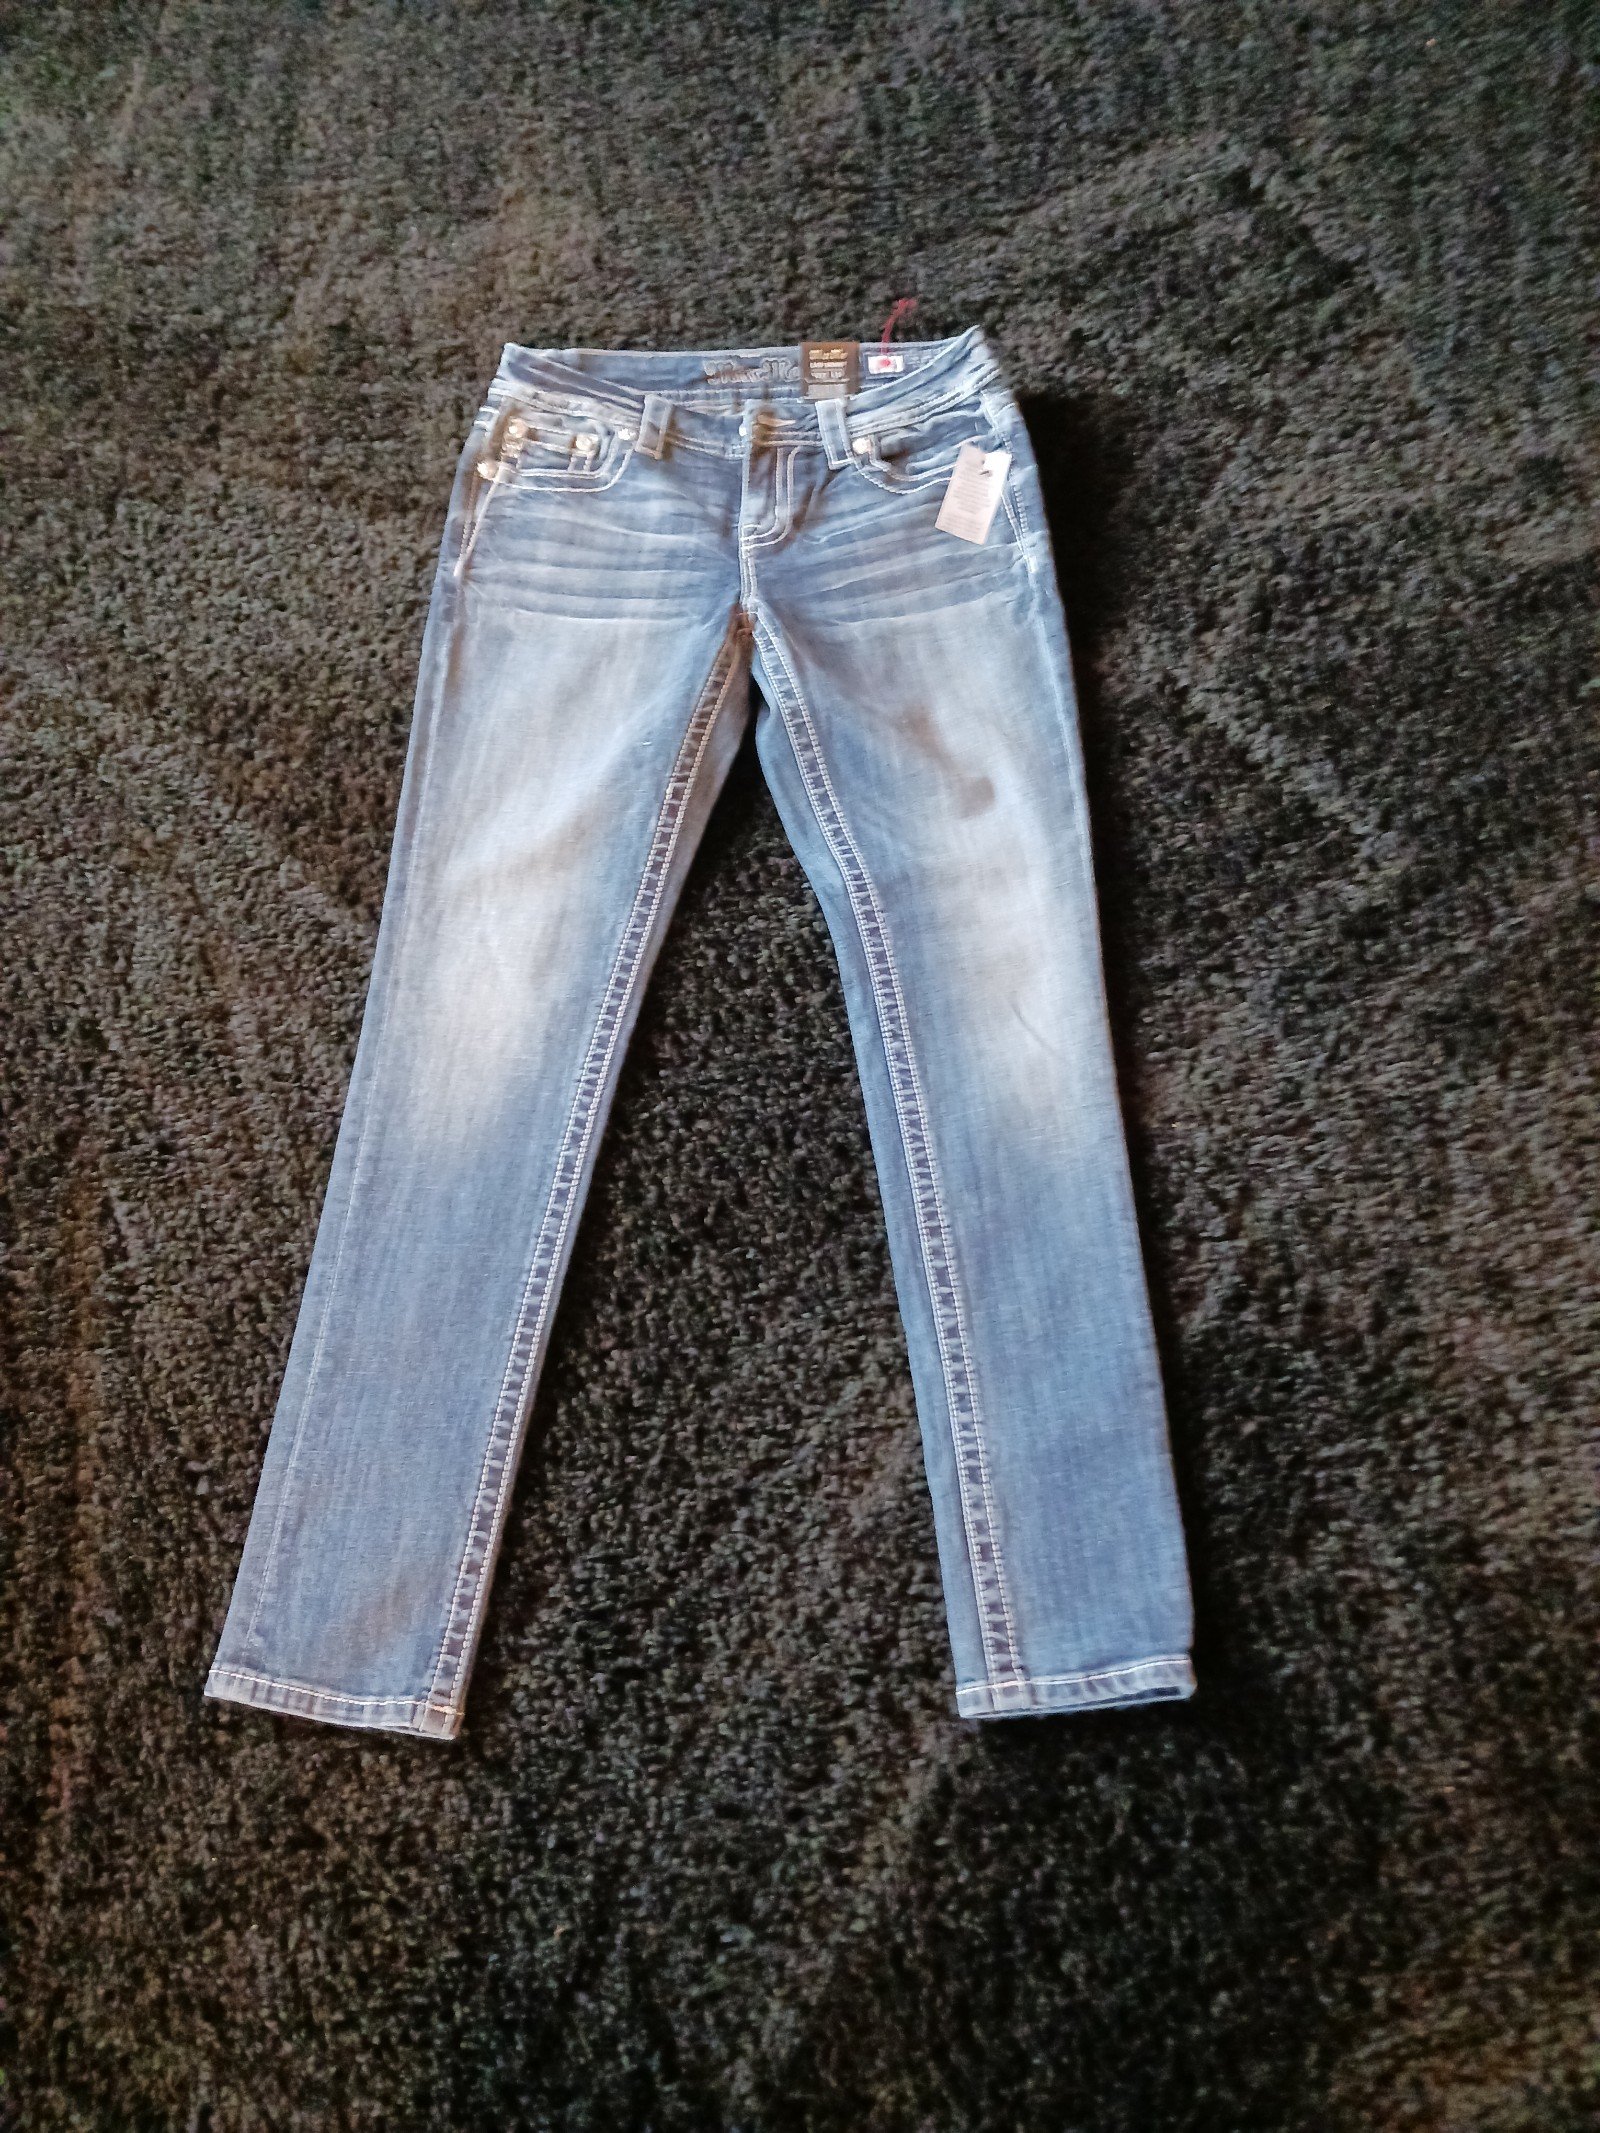 Factory Direct  Miss Me jeans size 27 pCJp2hki7 Hot Sal